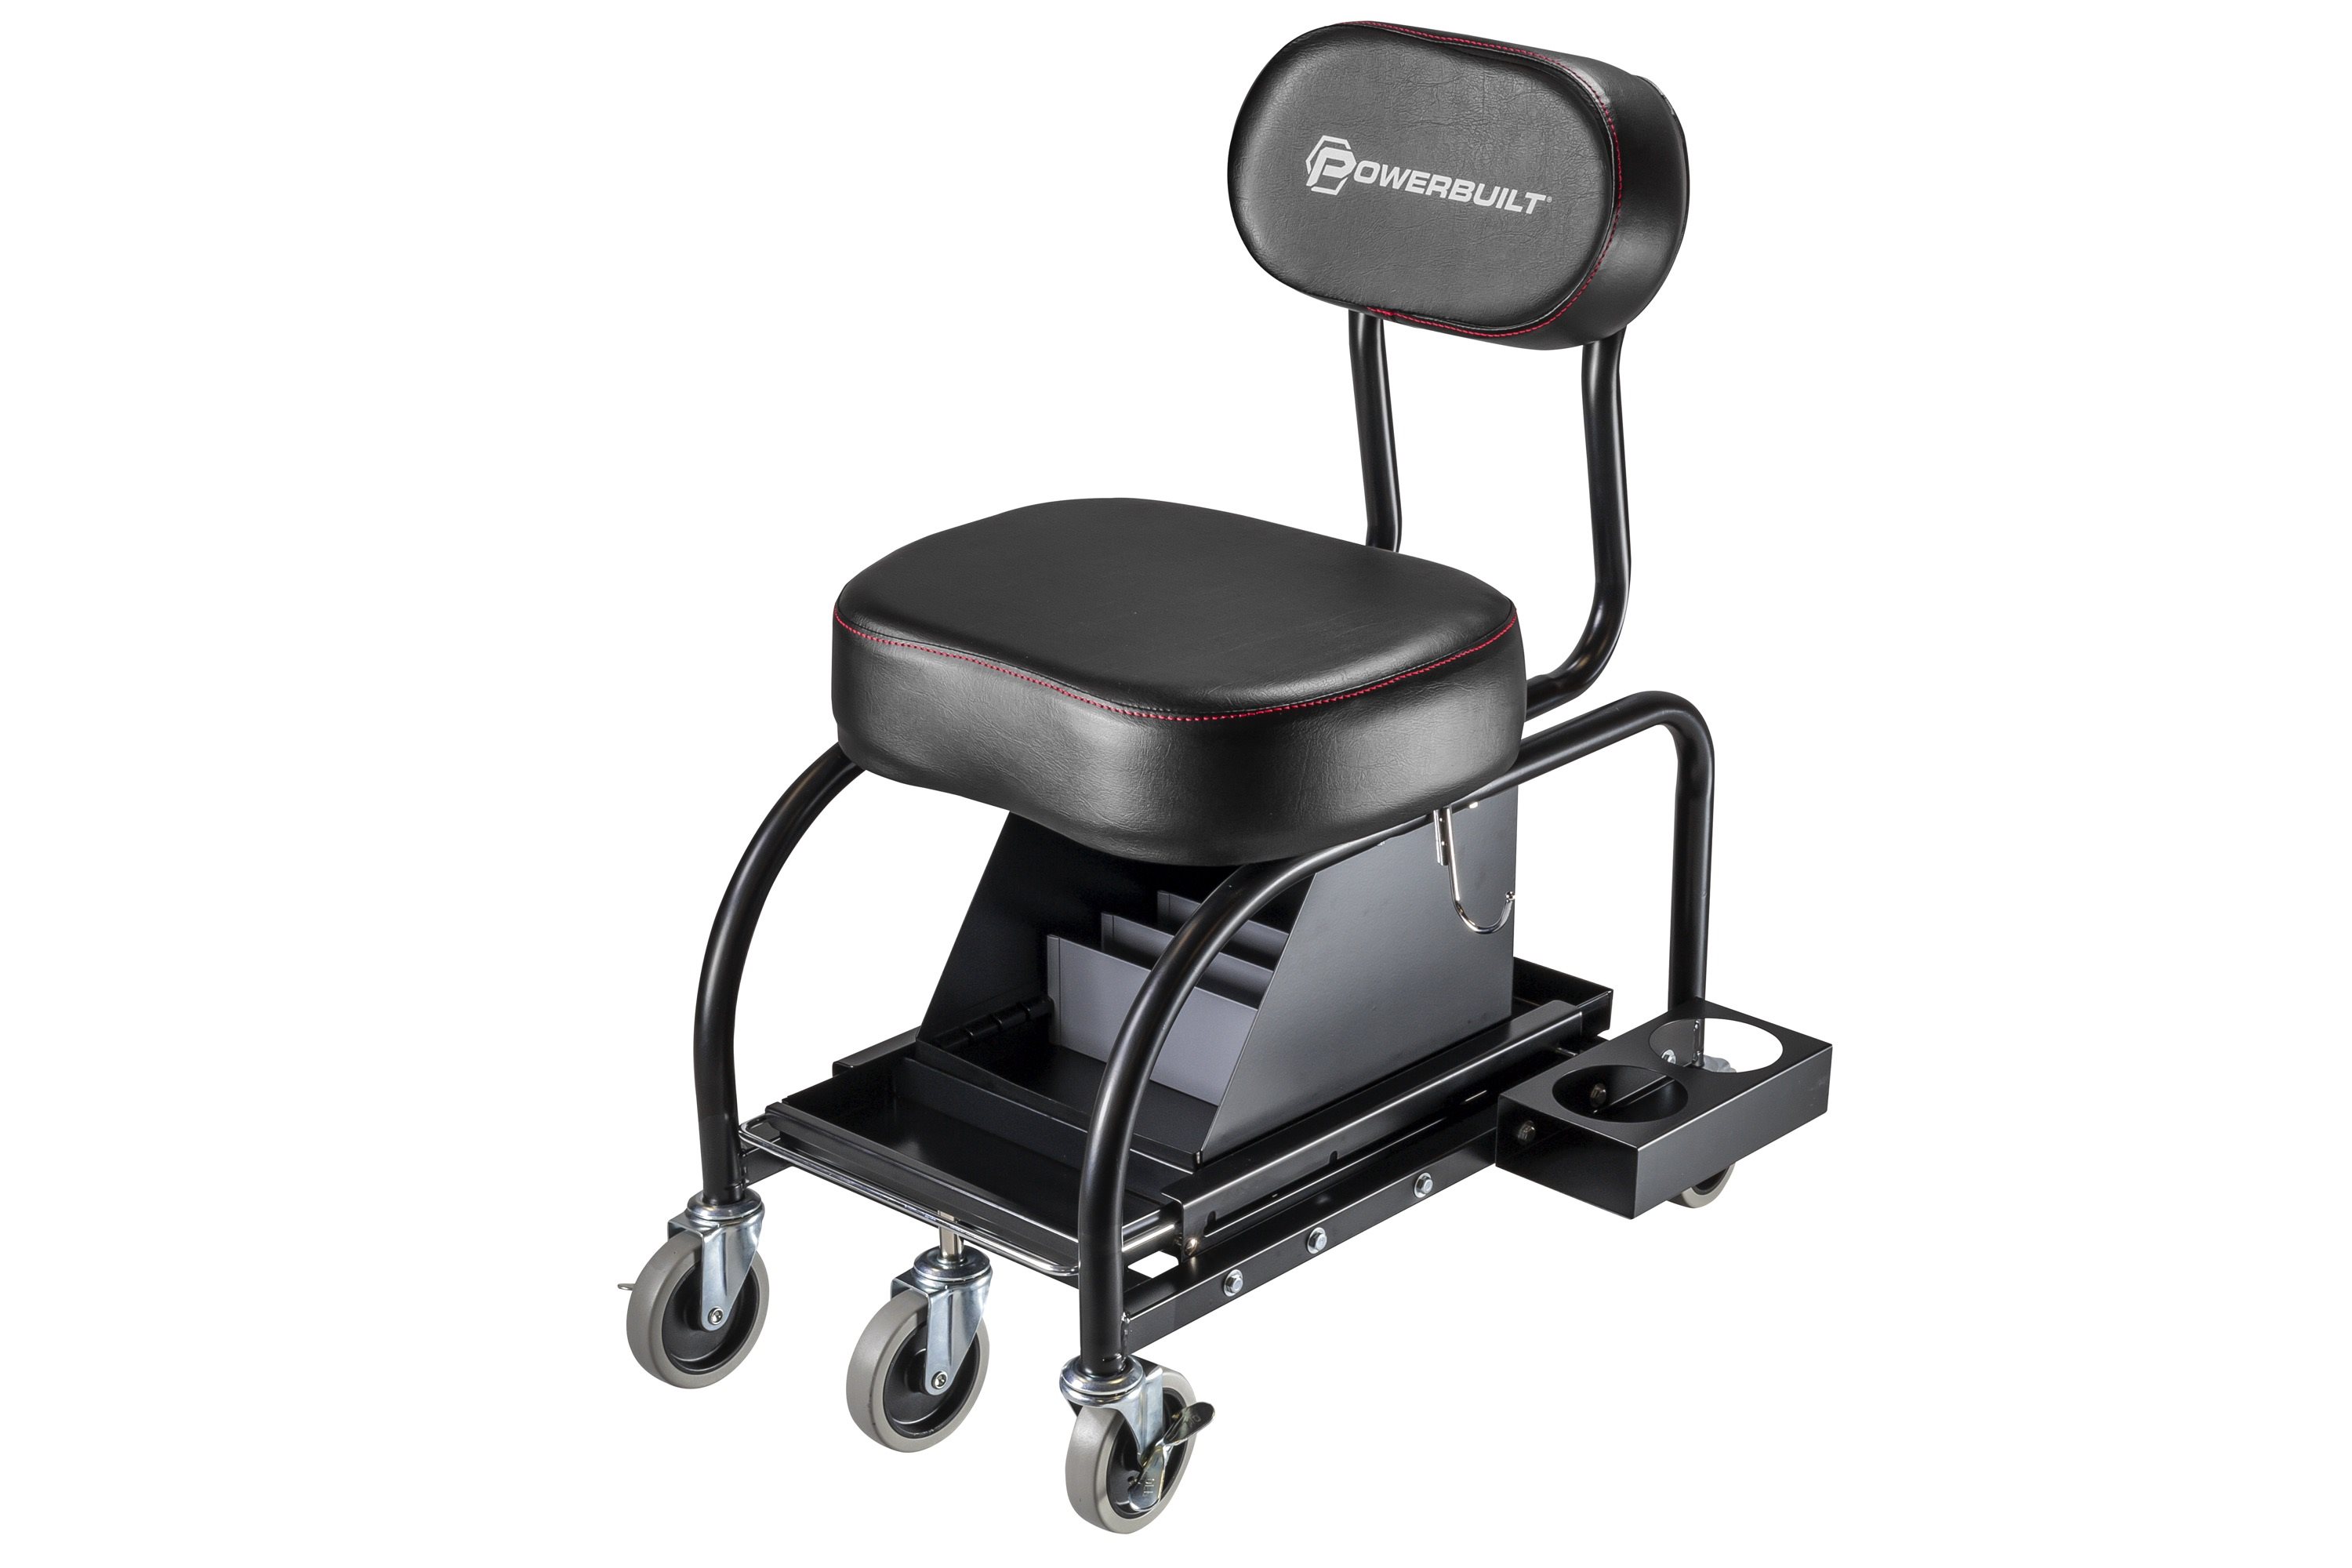 Alltrade Powerbuilt Professional Pneumatic Rolling Shop Seat, Black